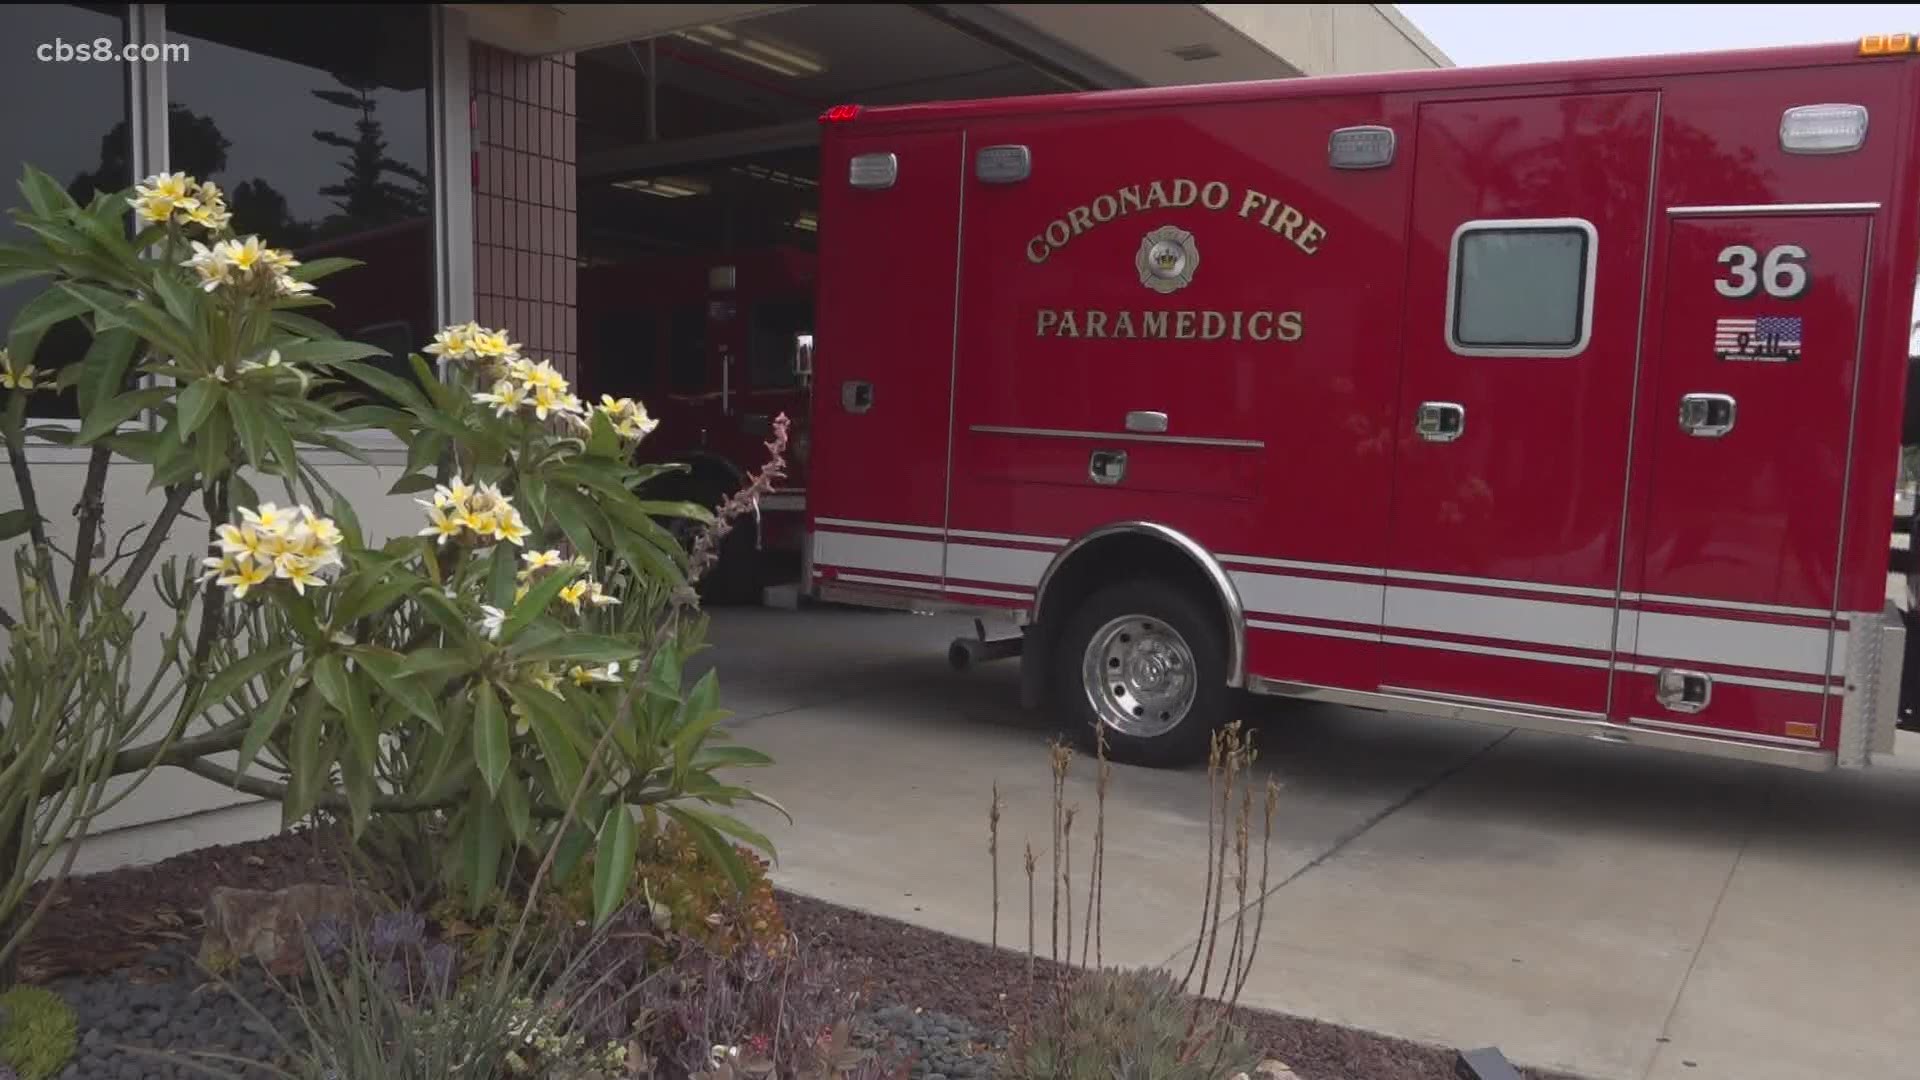 News 8 spoke to the Coronado Fire Department.